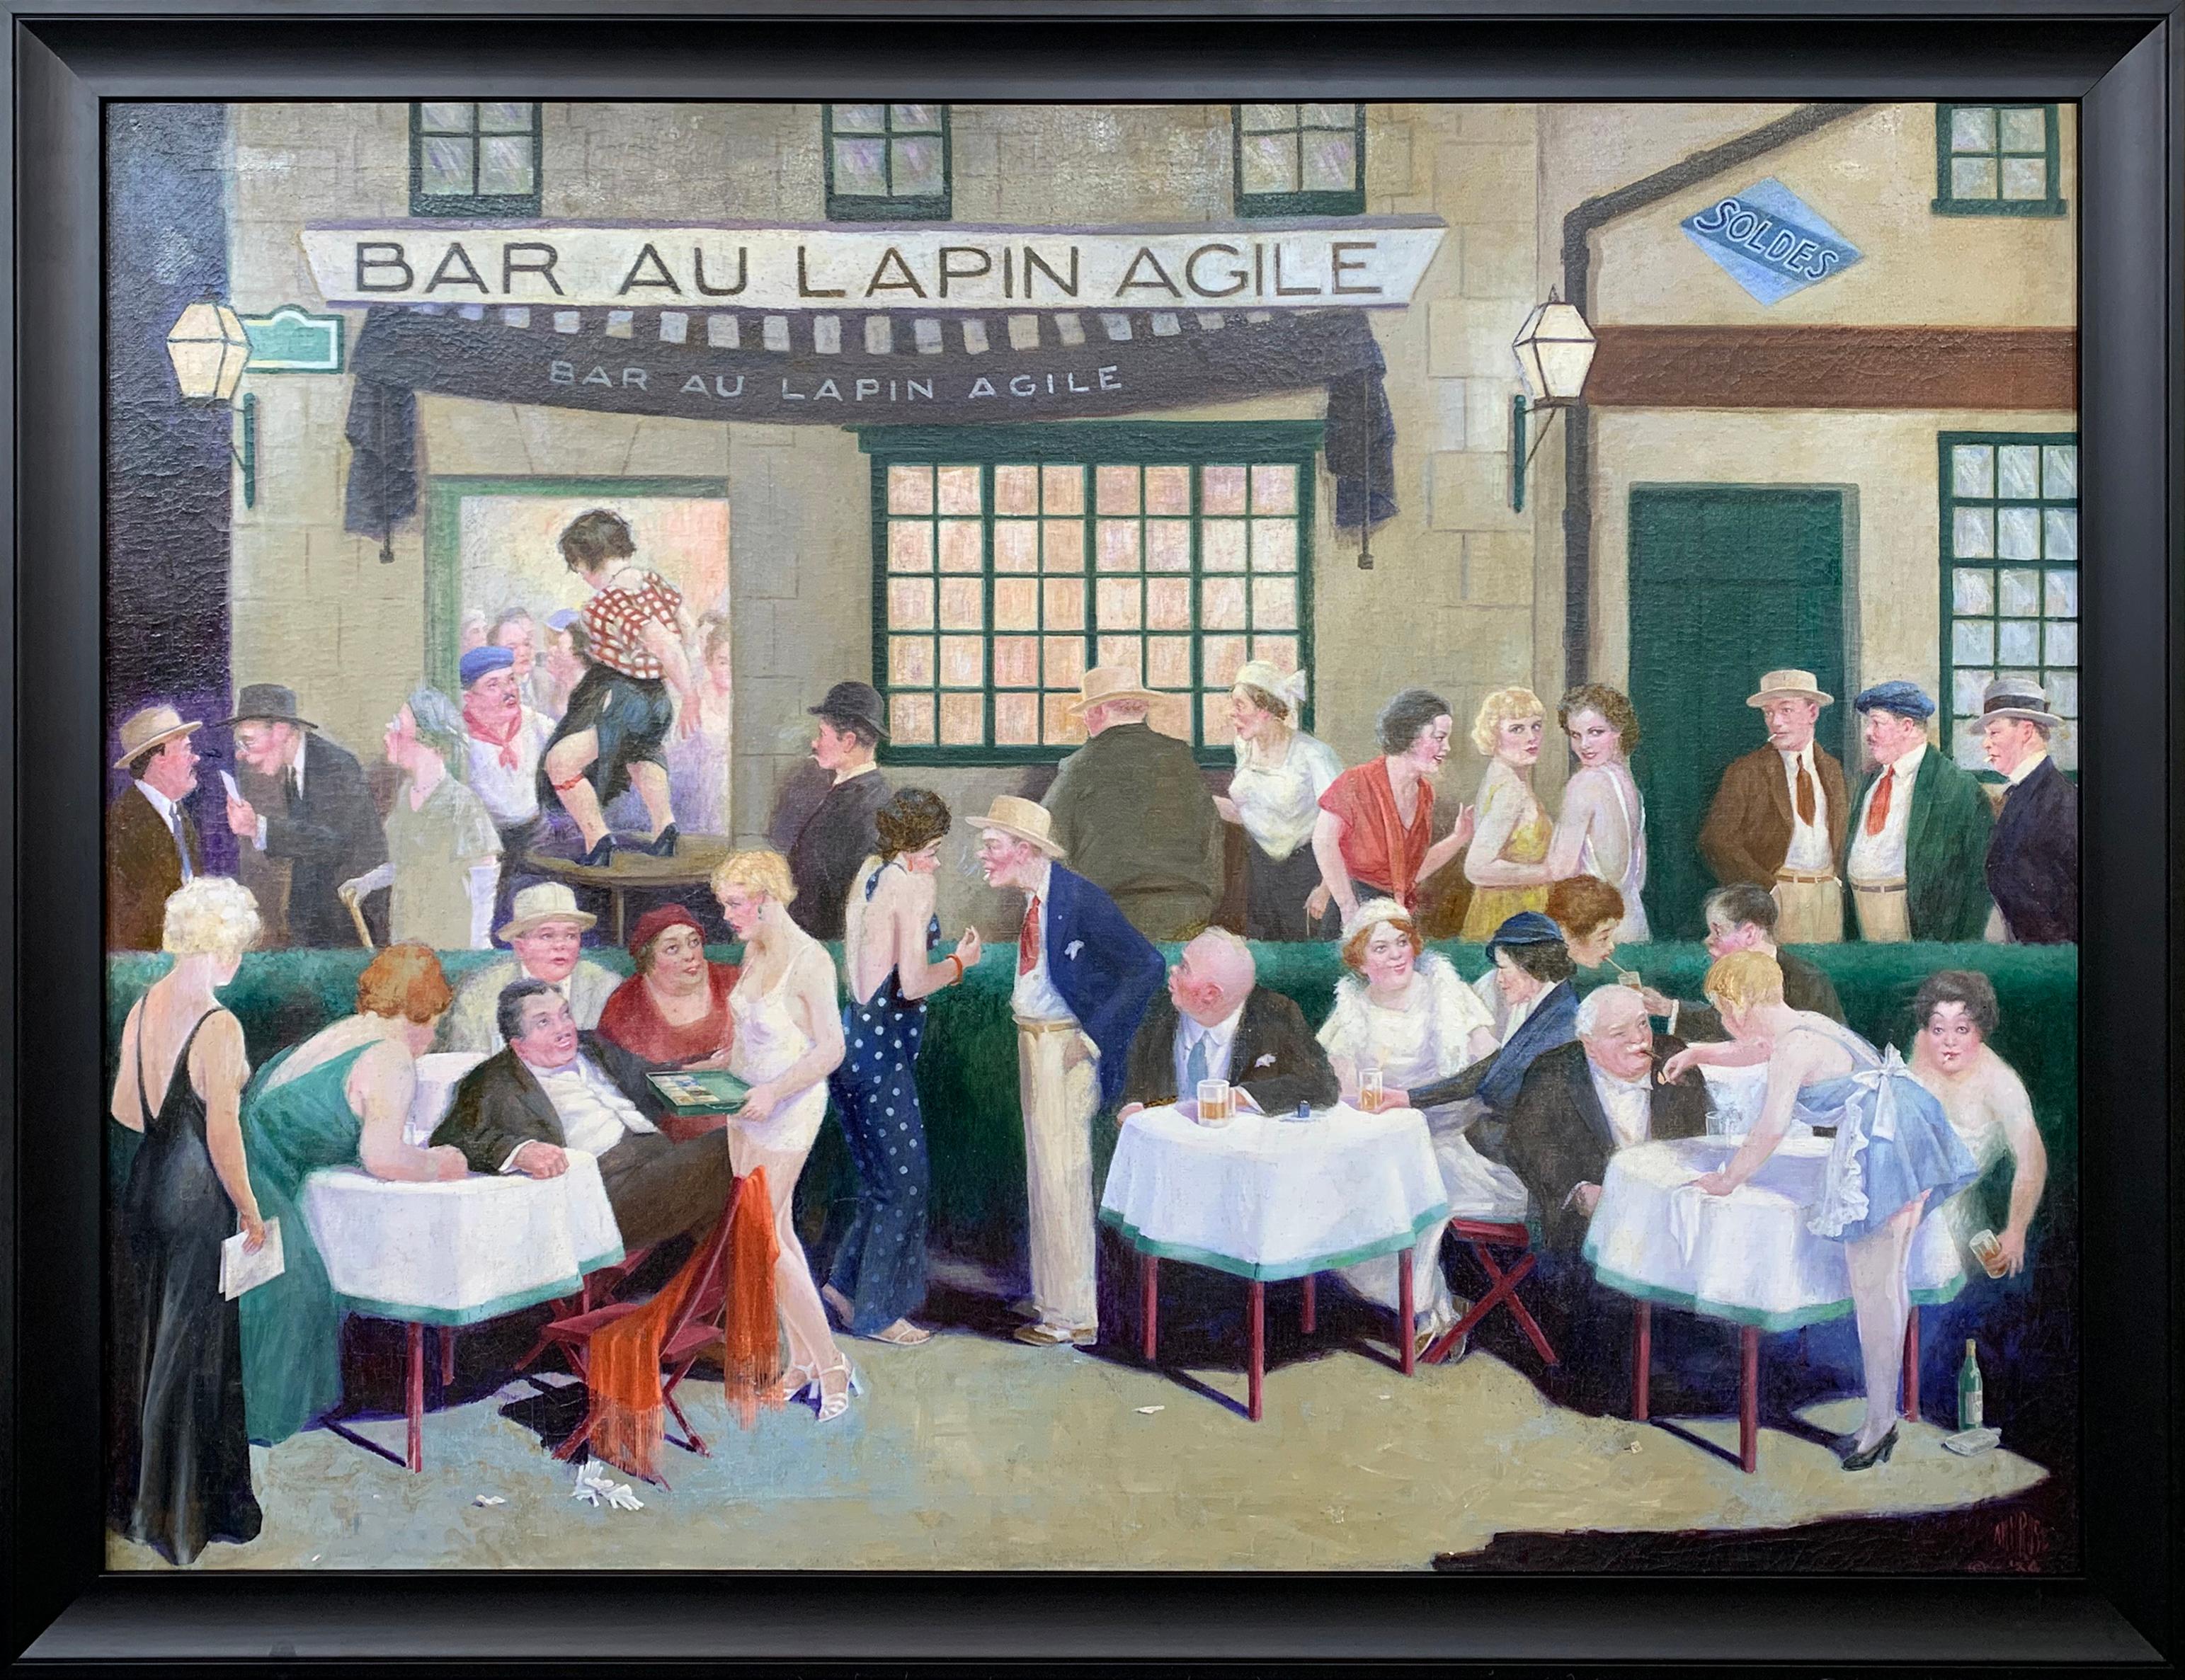 Lester Ambrose, Bar Au Lapin Agile 1934, Genre Illustration and Bar Scene - Painting by Lester J. Ambrose